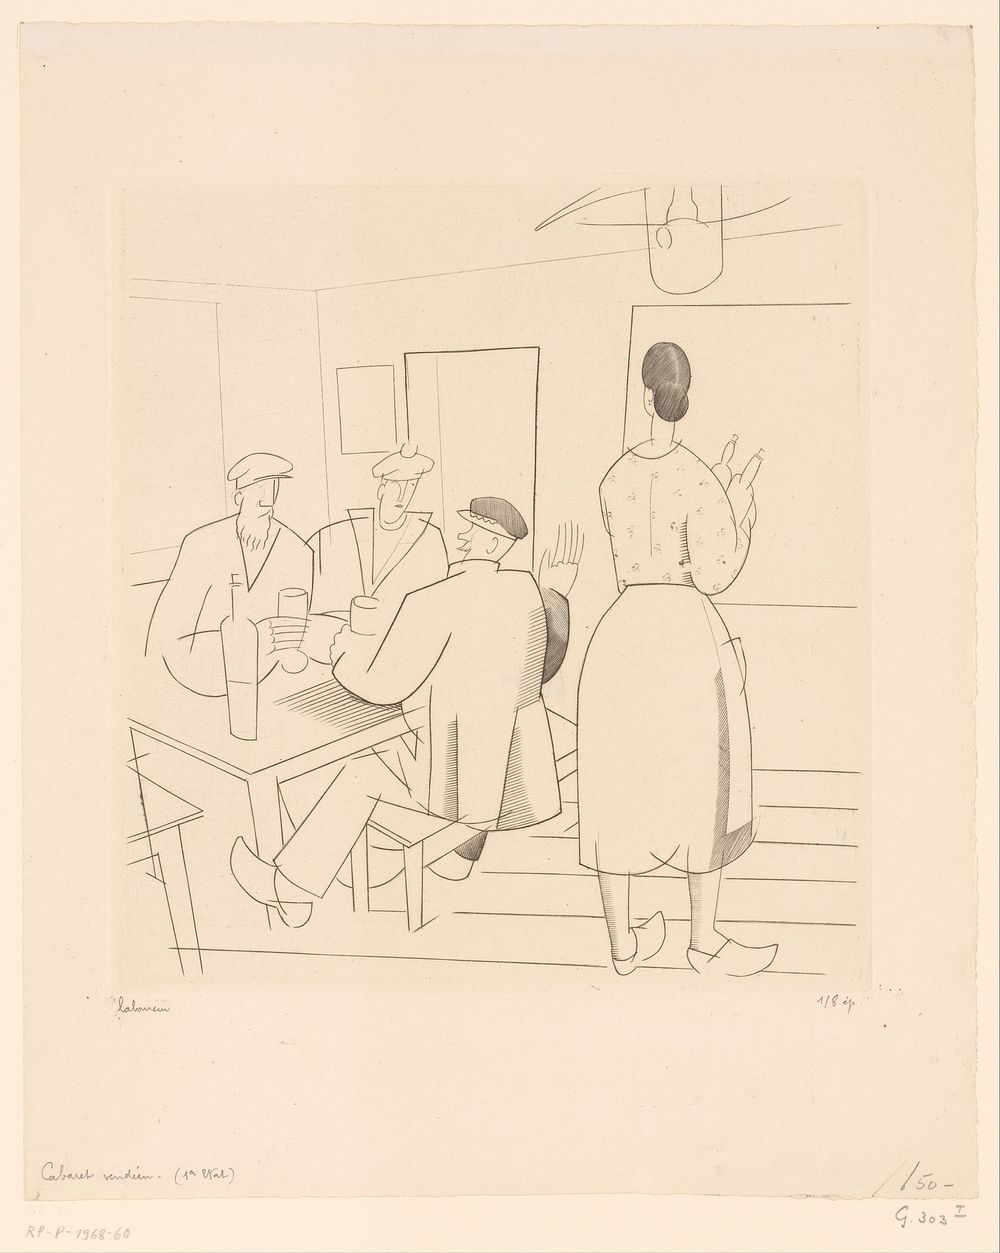 Caféinterieur met klanten en serveerster (1925) by Jean Emile Laboureur